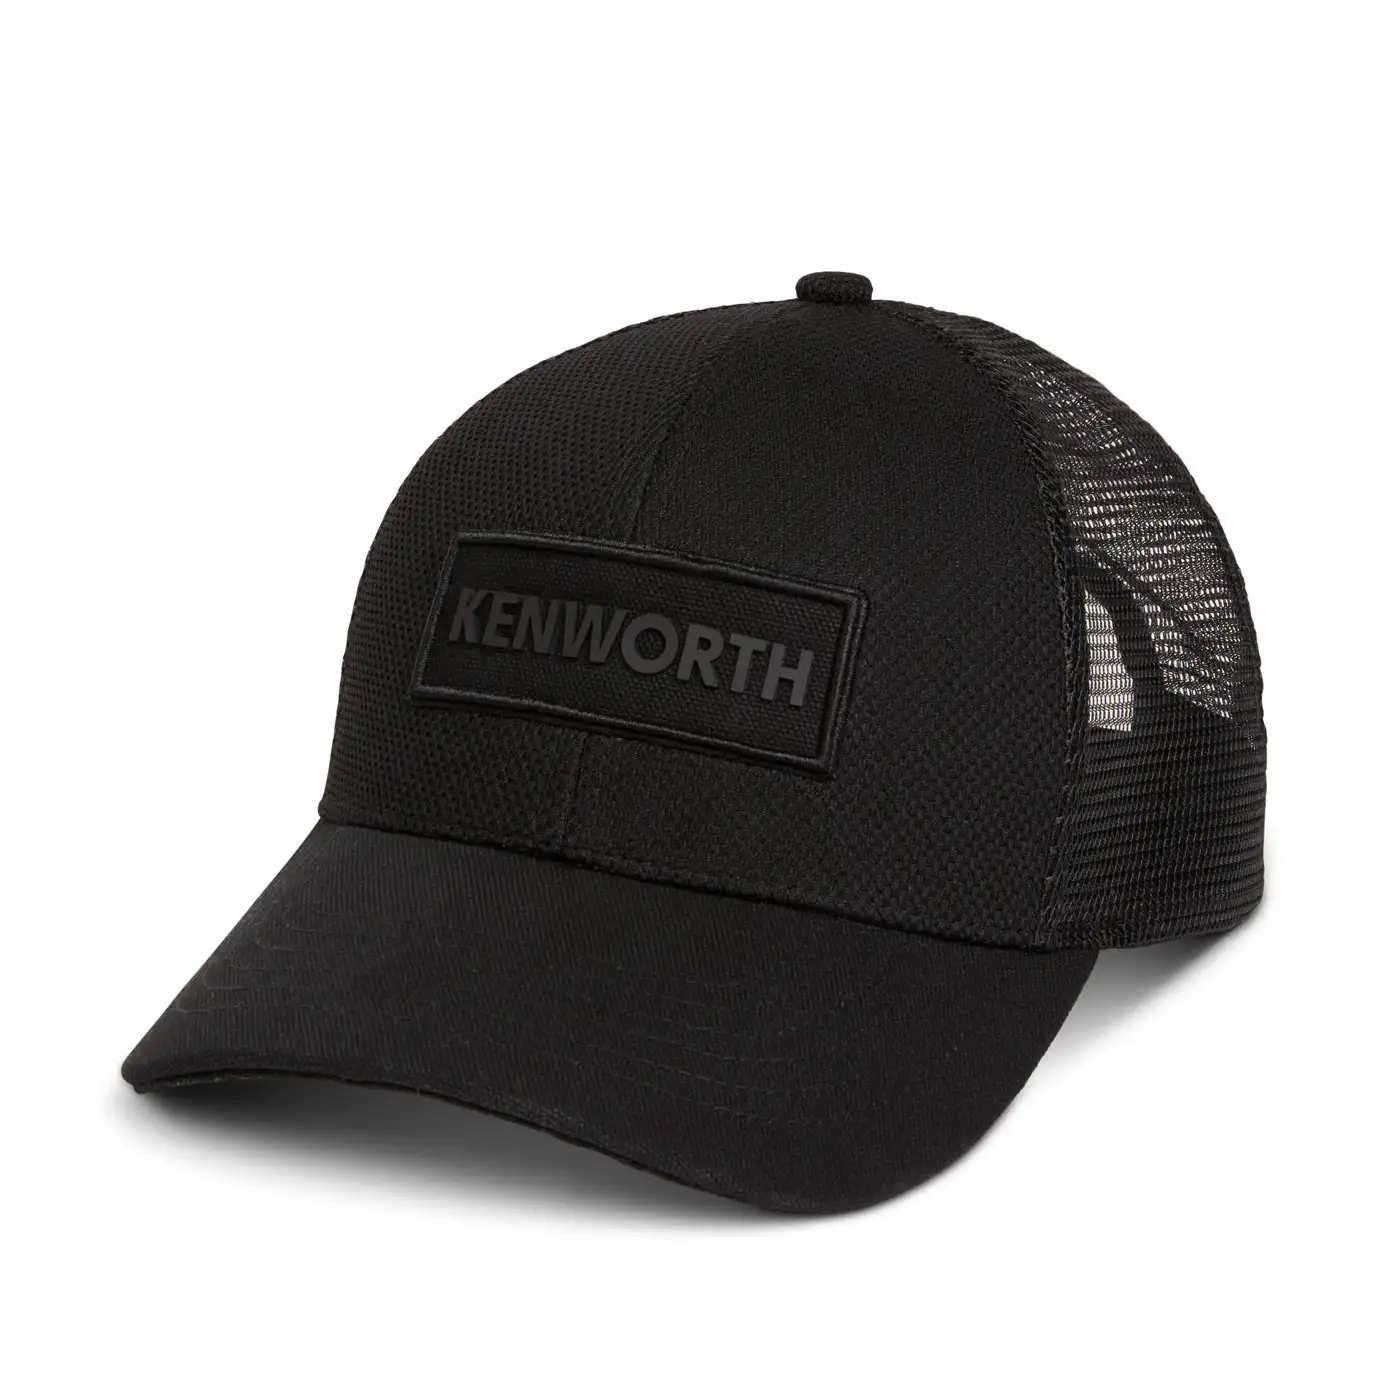 Caps all black Kenworth